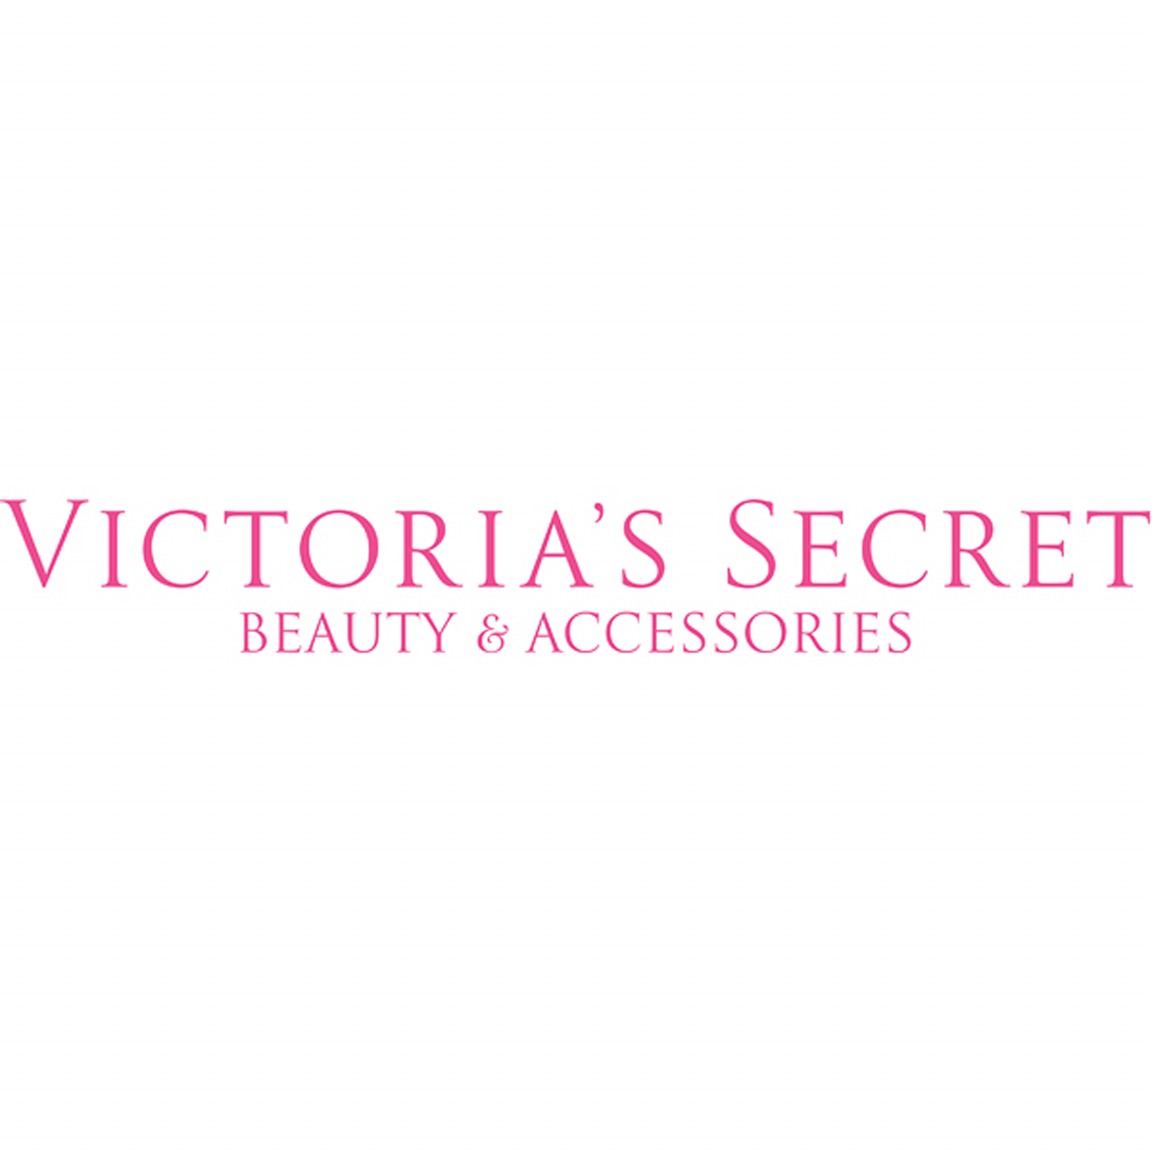 VICTORIA'S SECRET BEAUTY & ACCESSORIES